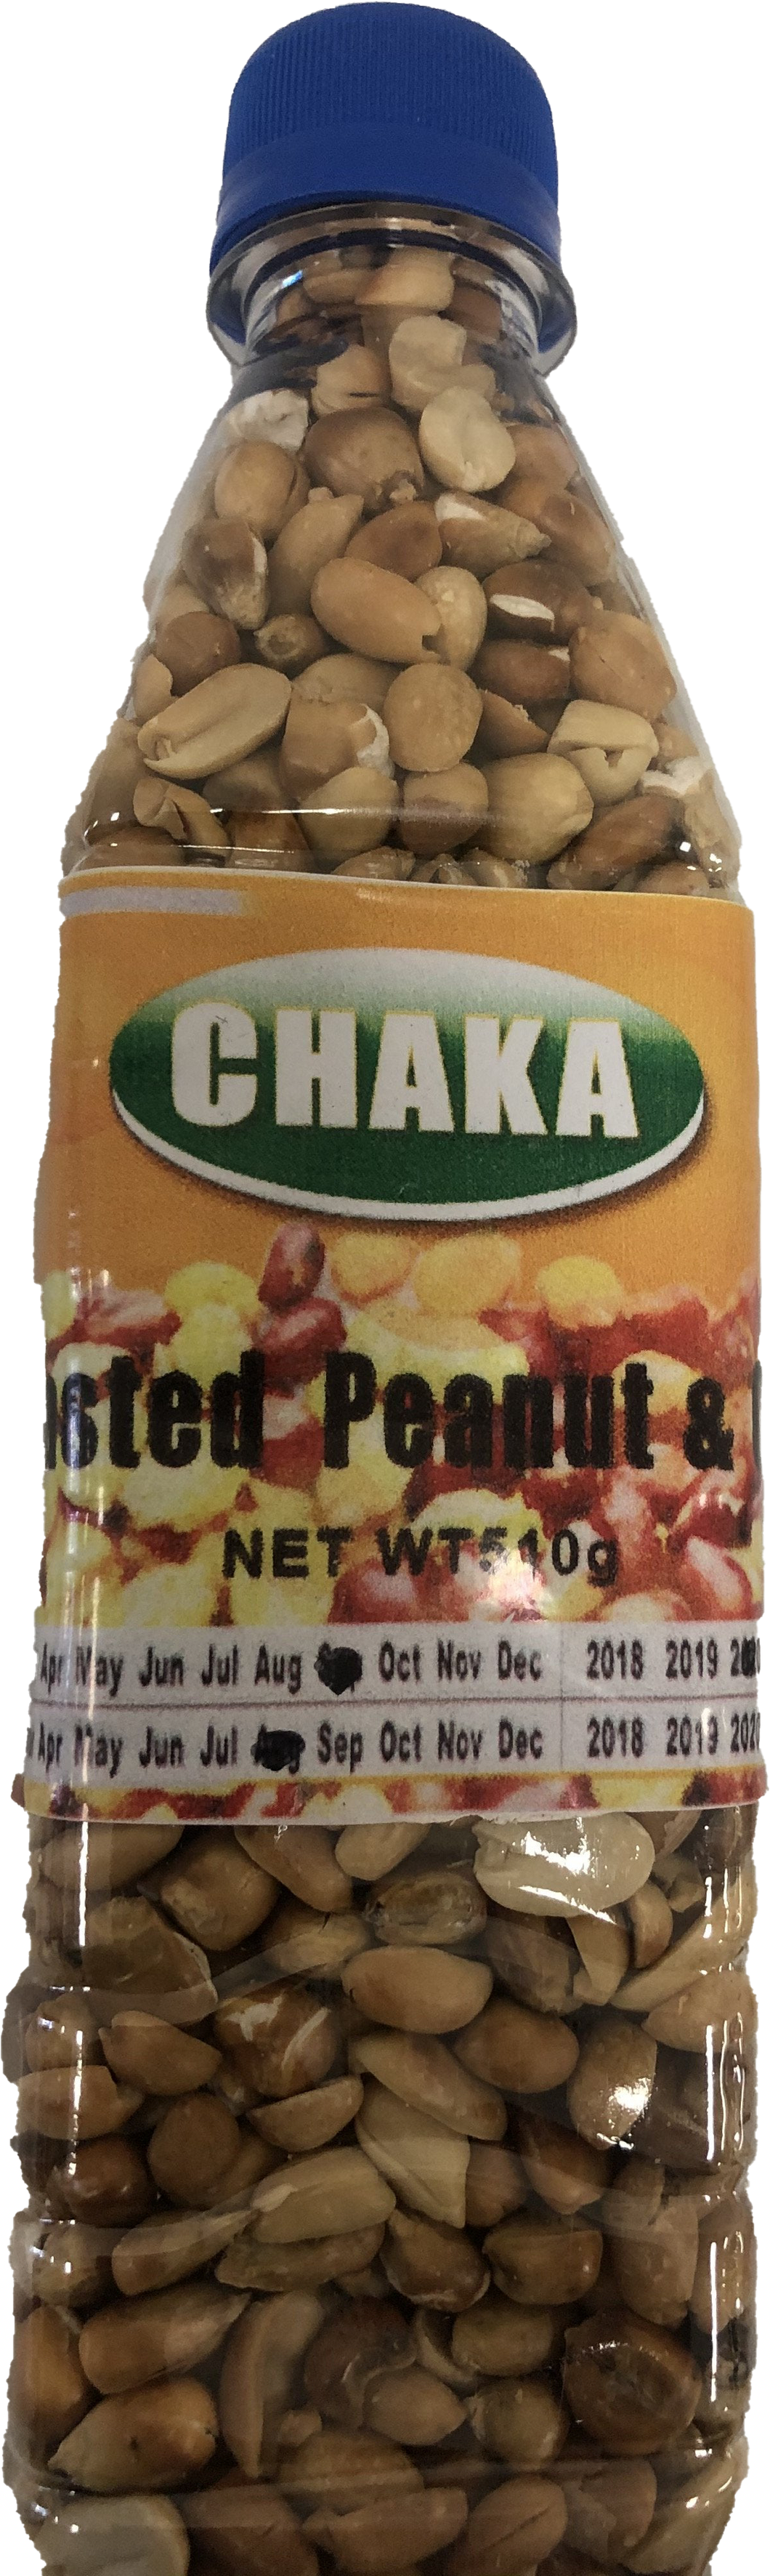 Chaka Peanuts